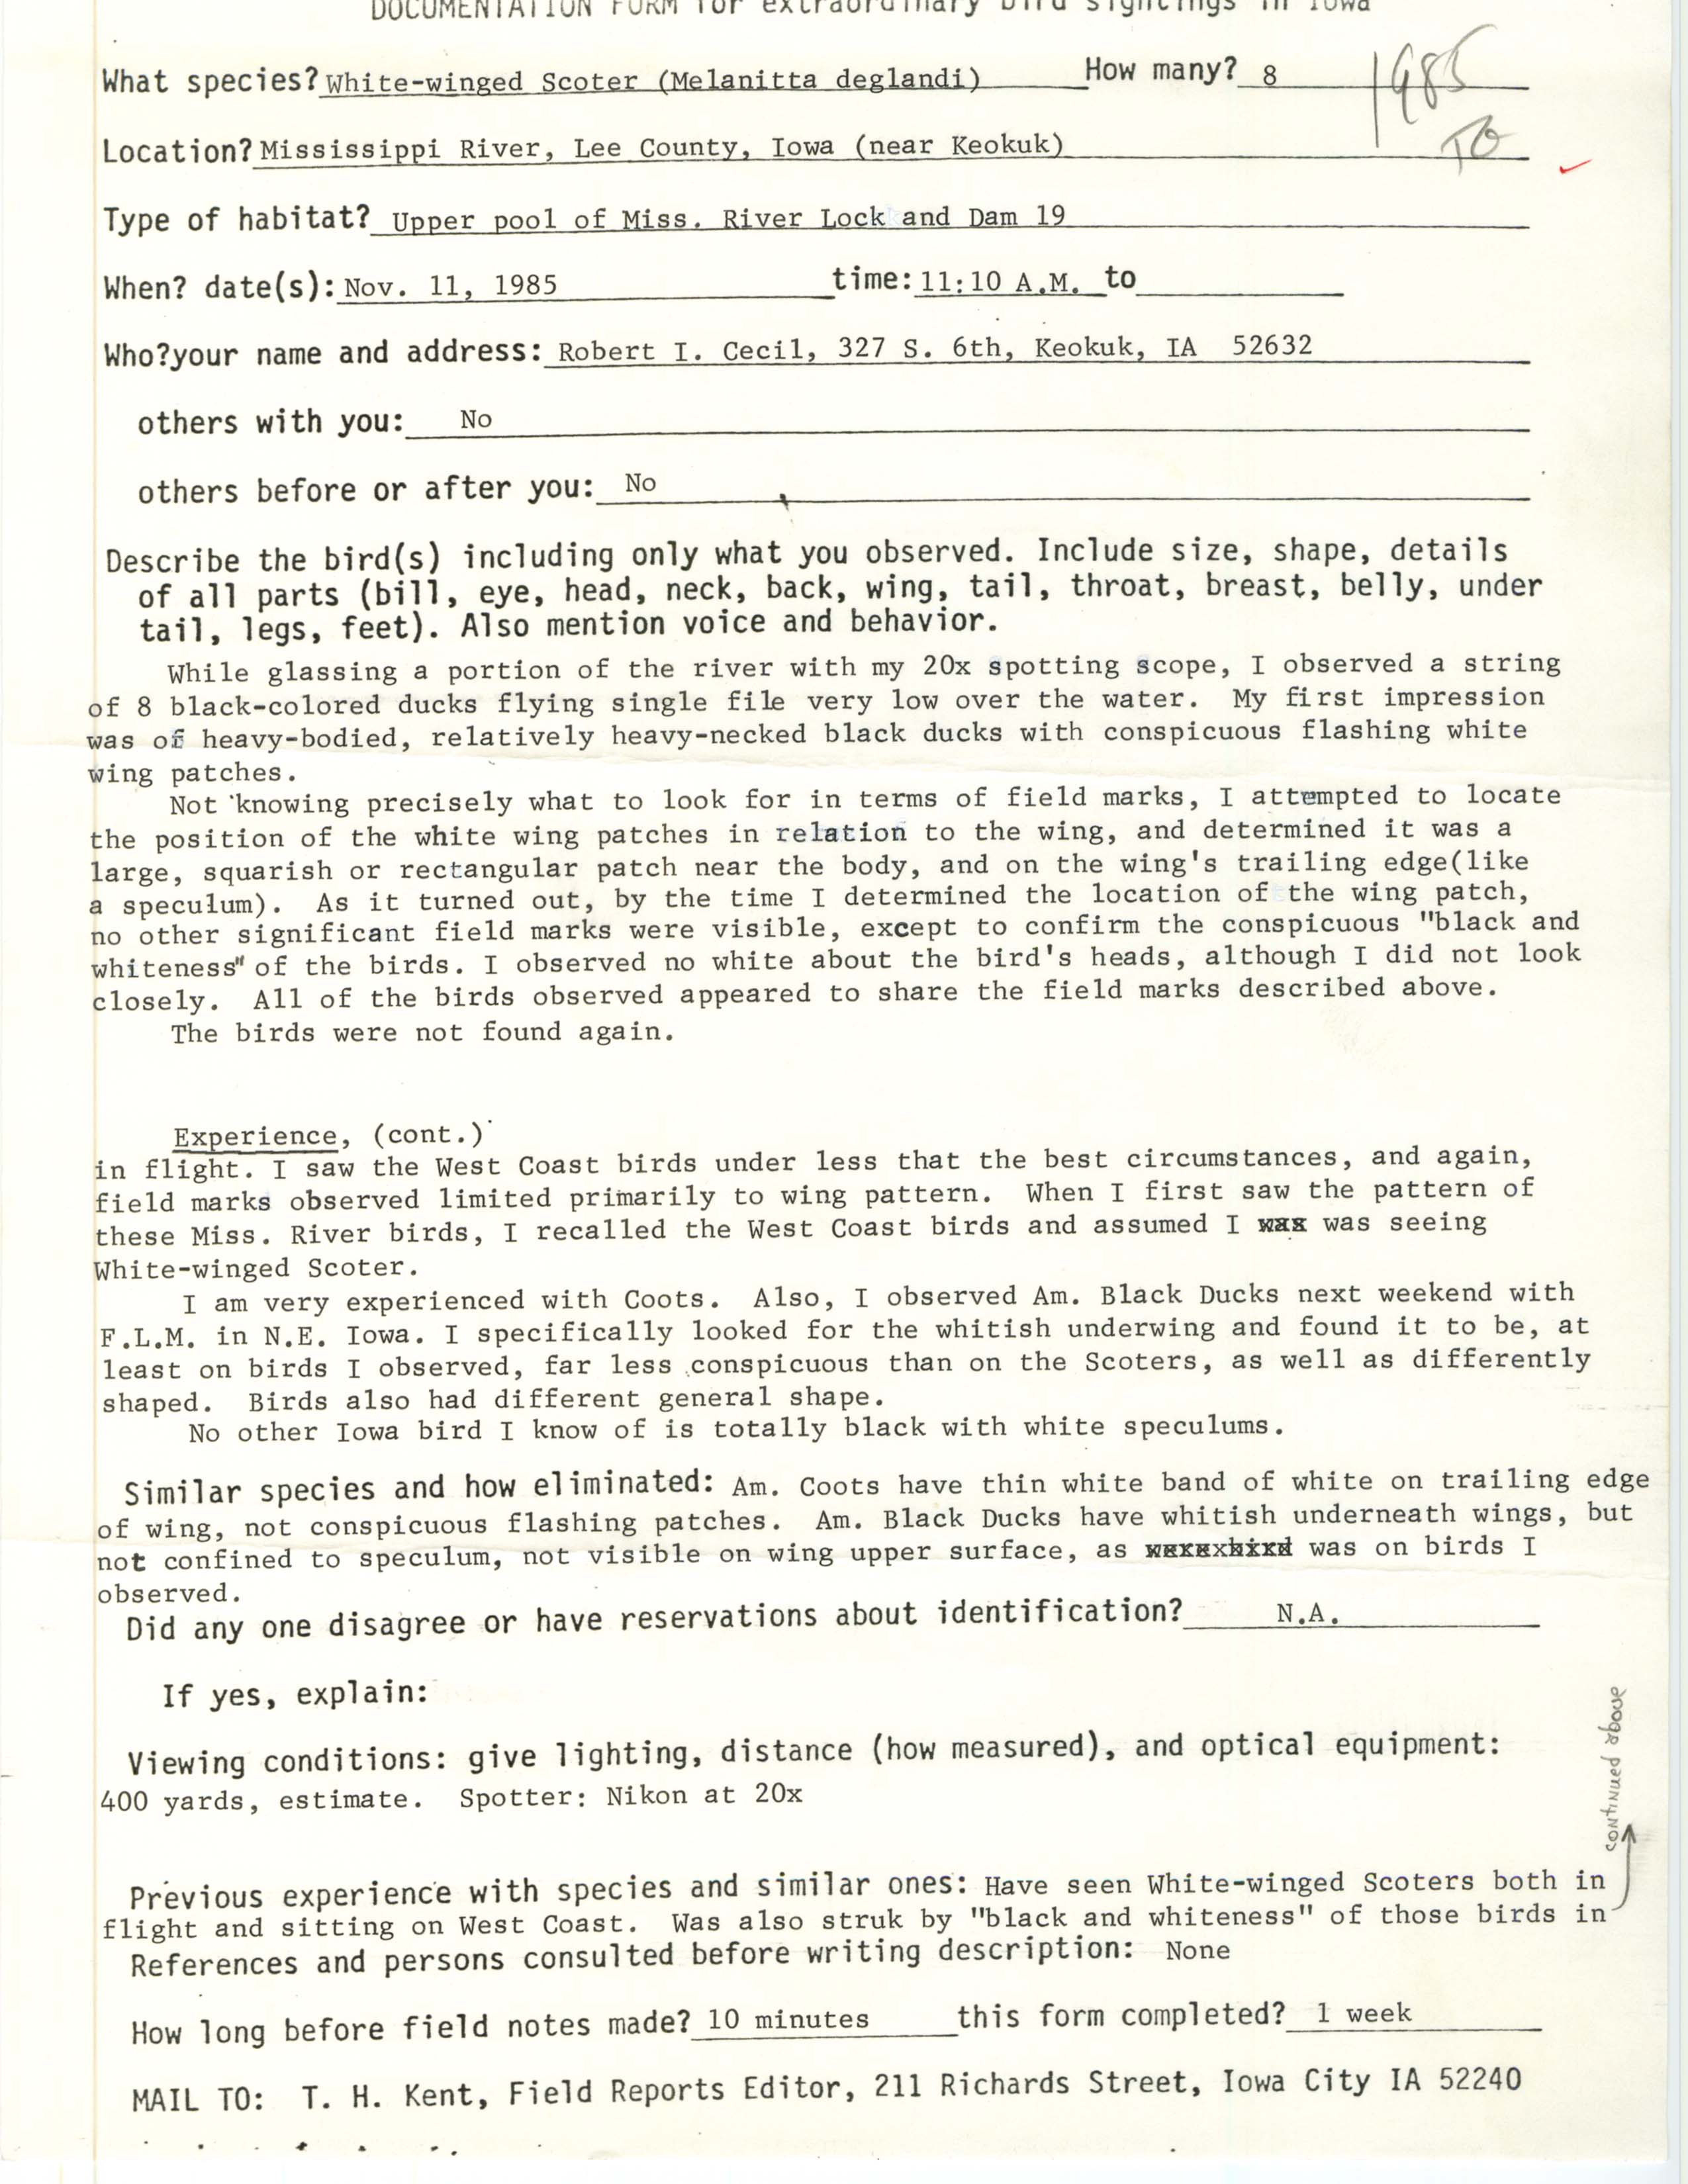 Rare bird documentation form for White-winged Scoter near Keokuk, 1985